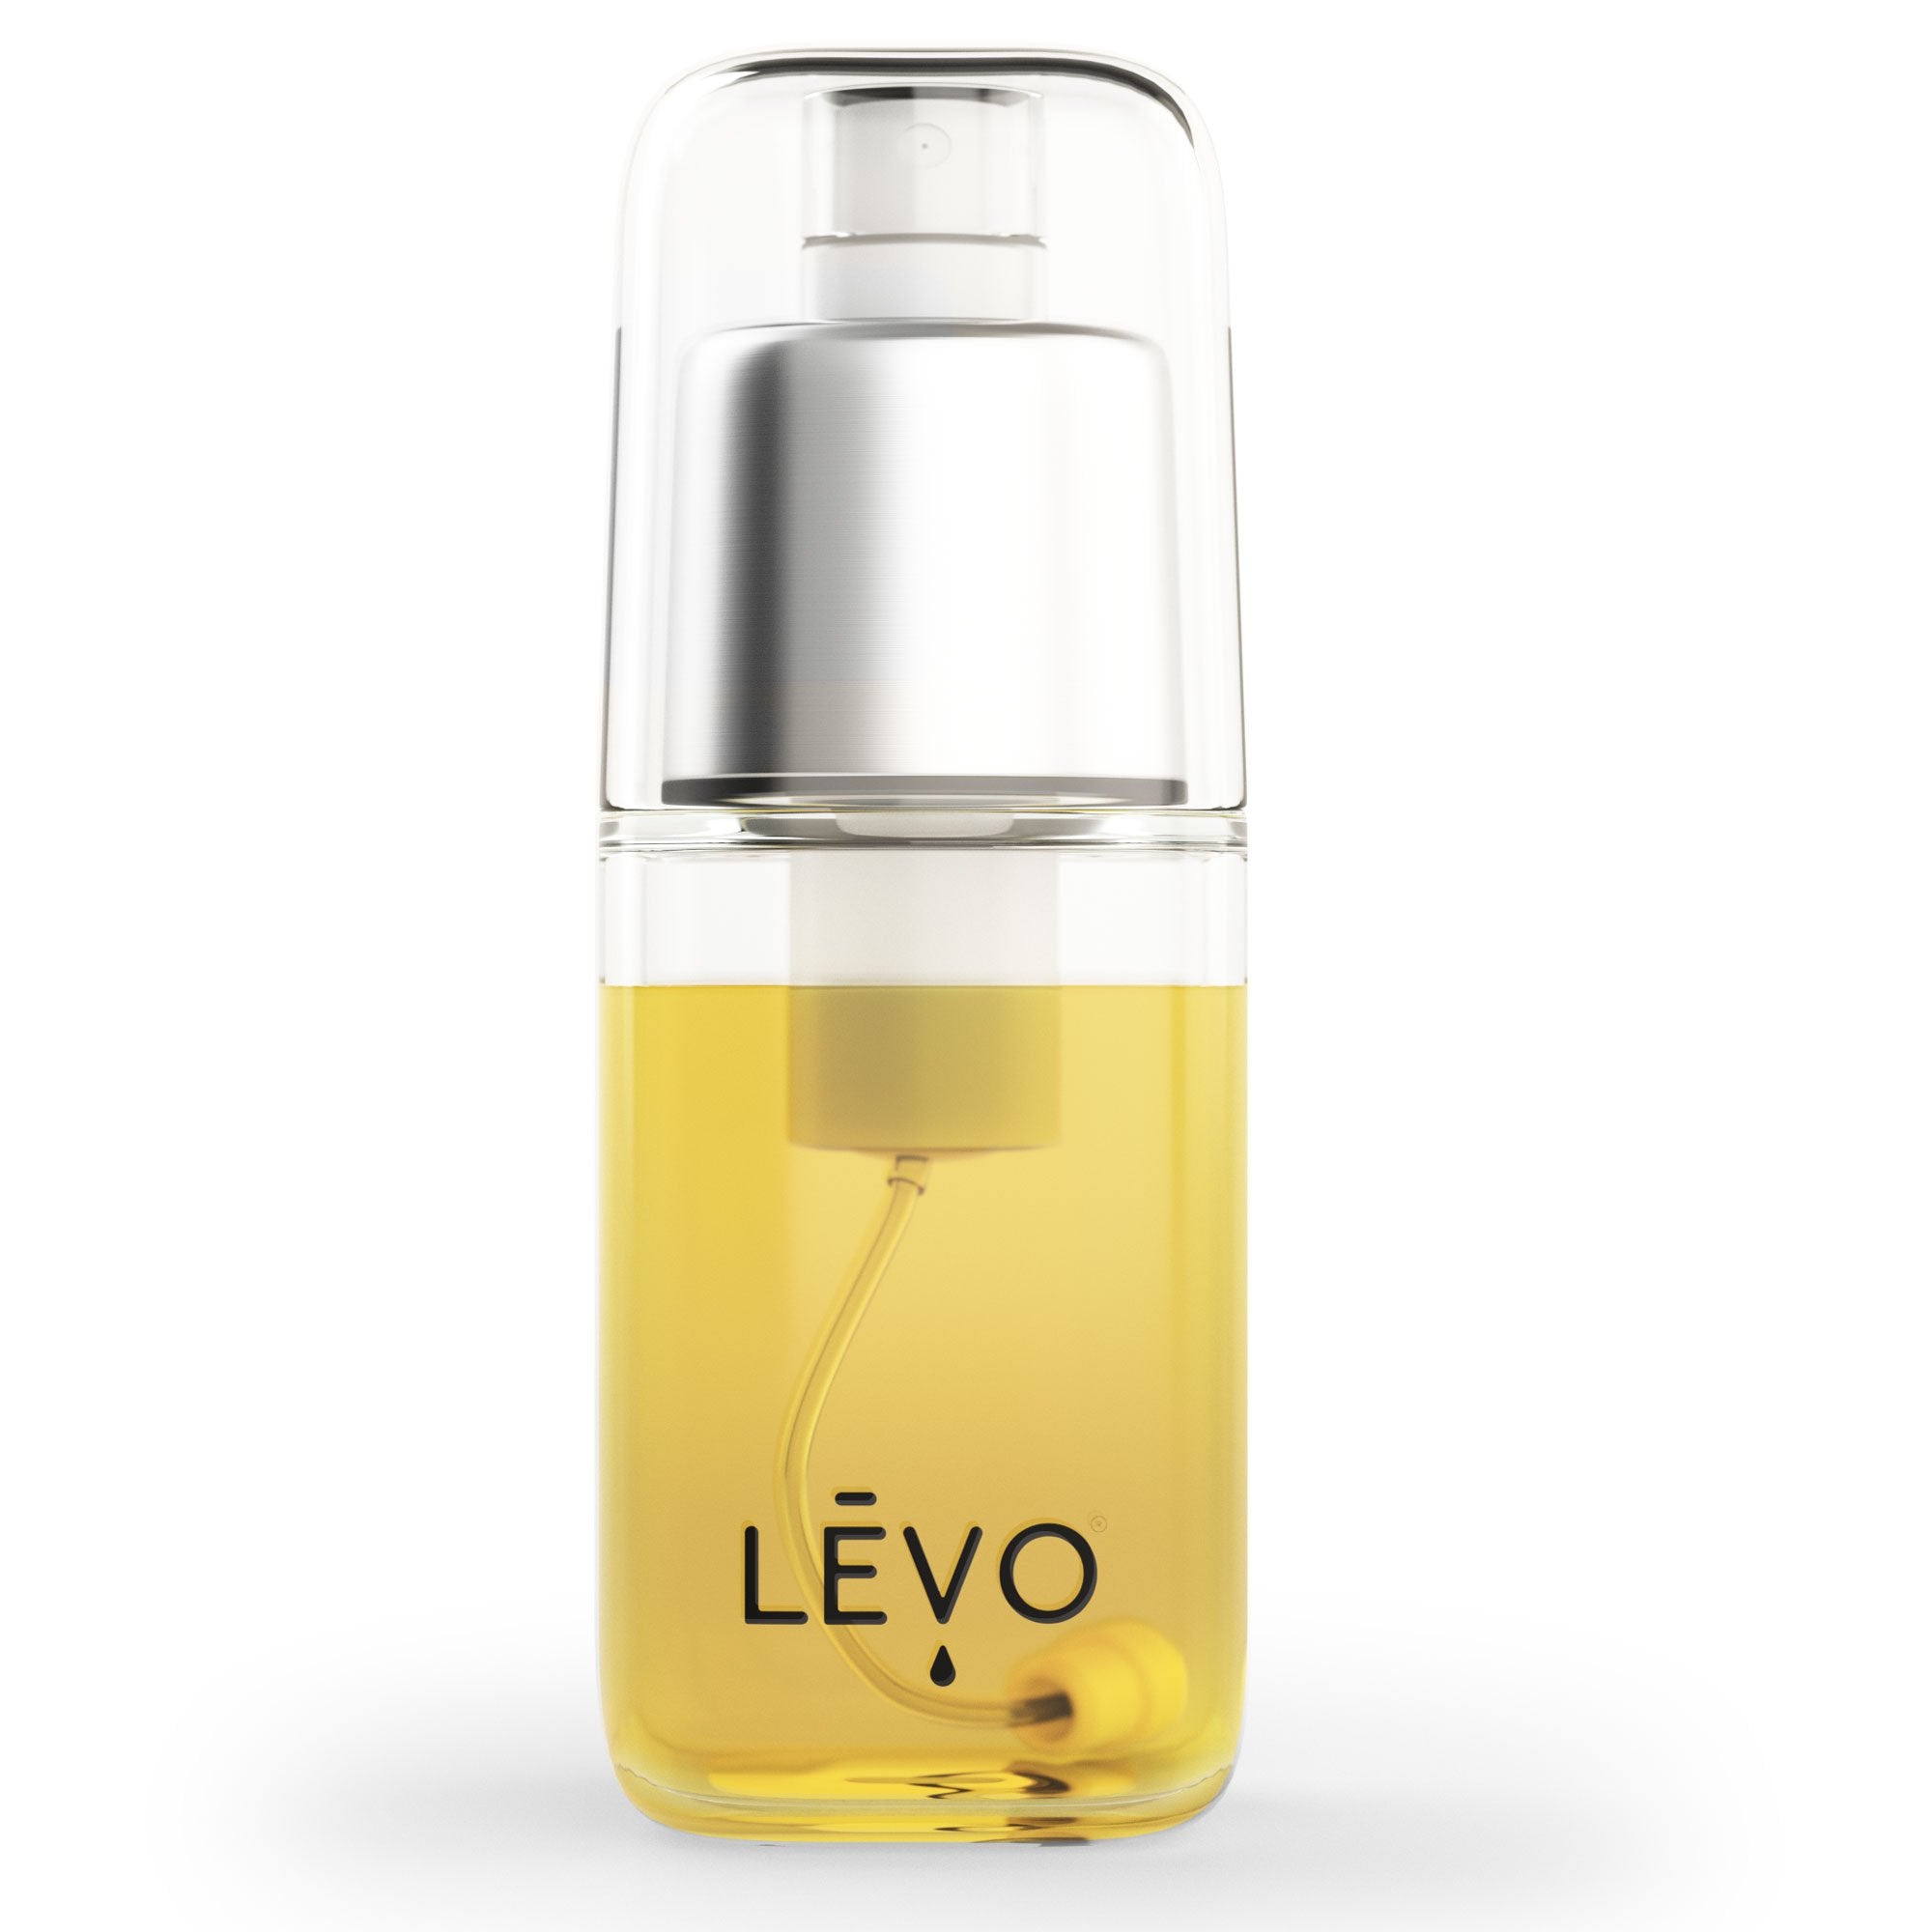 LEVO oil or butter fine mist sprayer, reusable and eco-friendly!